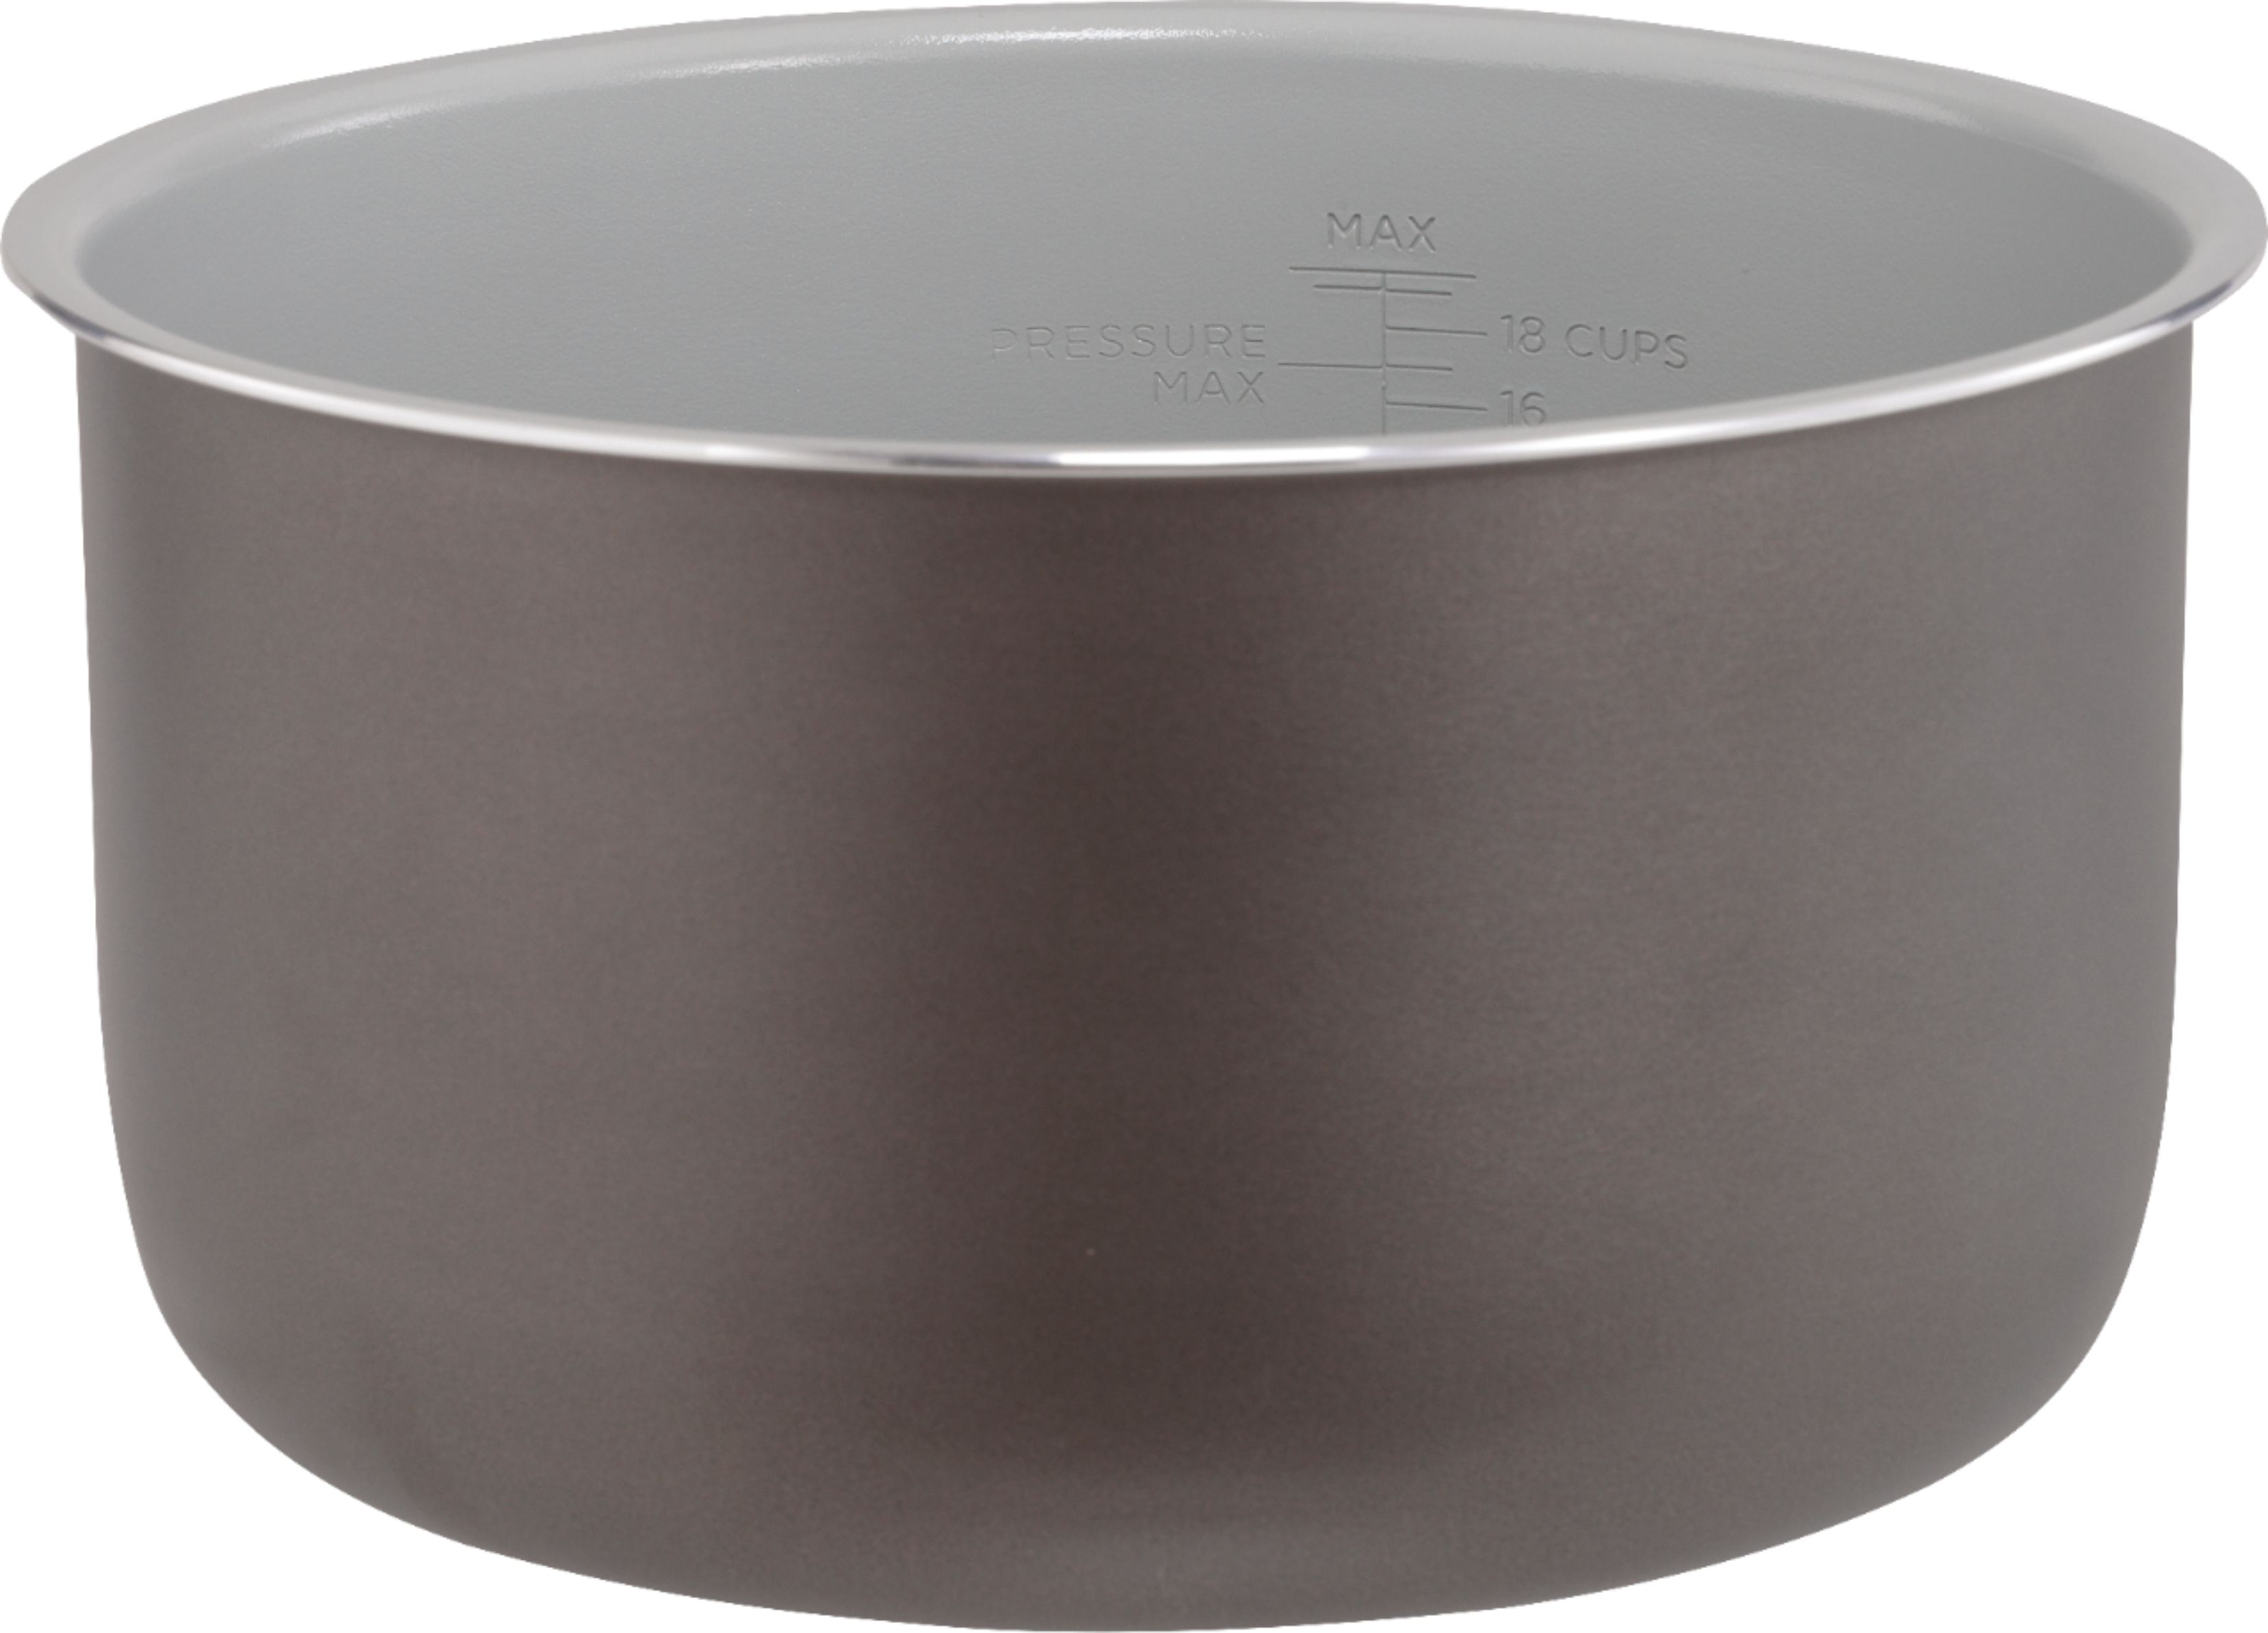 Angle View: Ninja - Foodi 6.5-Quart Ceramic-Coated Inner Pot - Gray